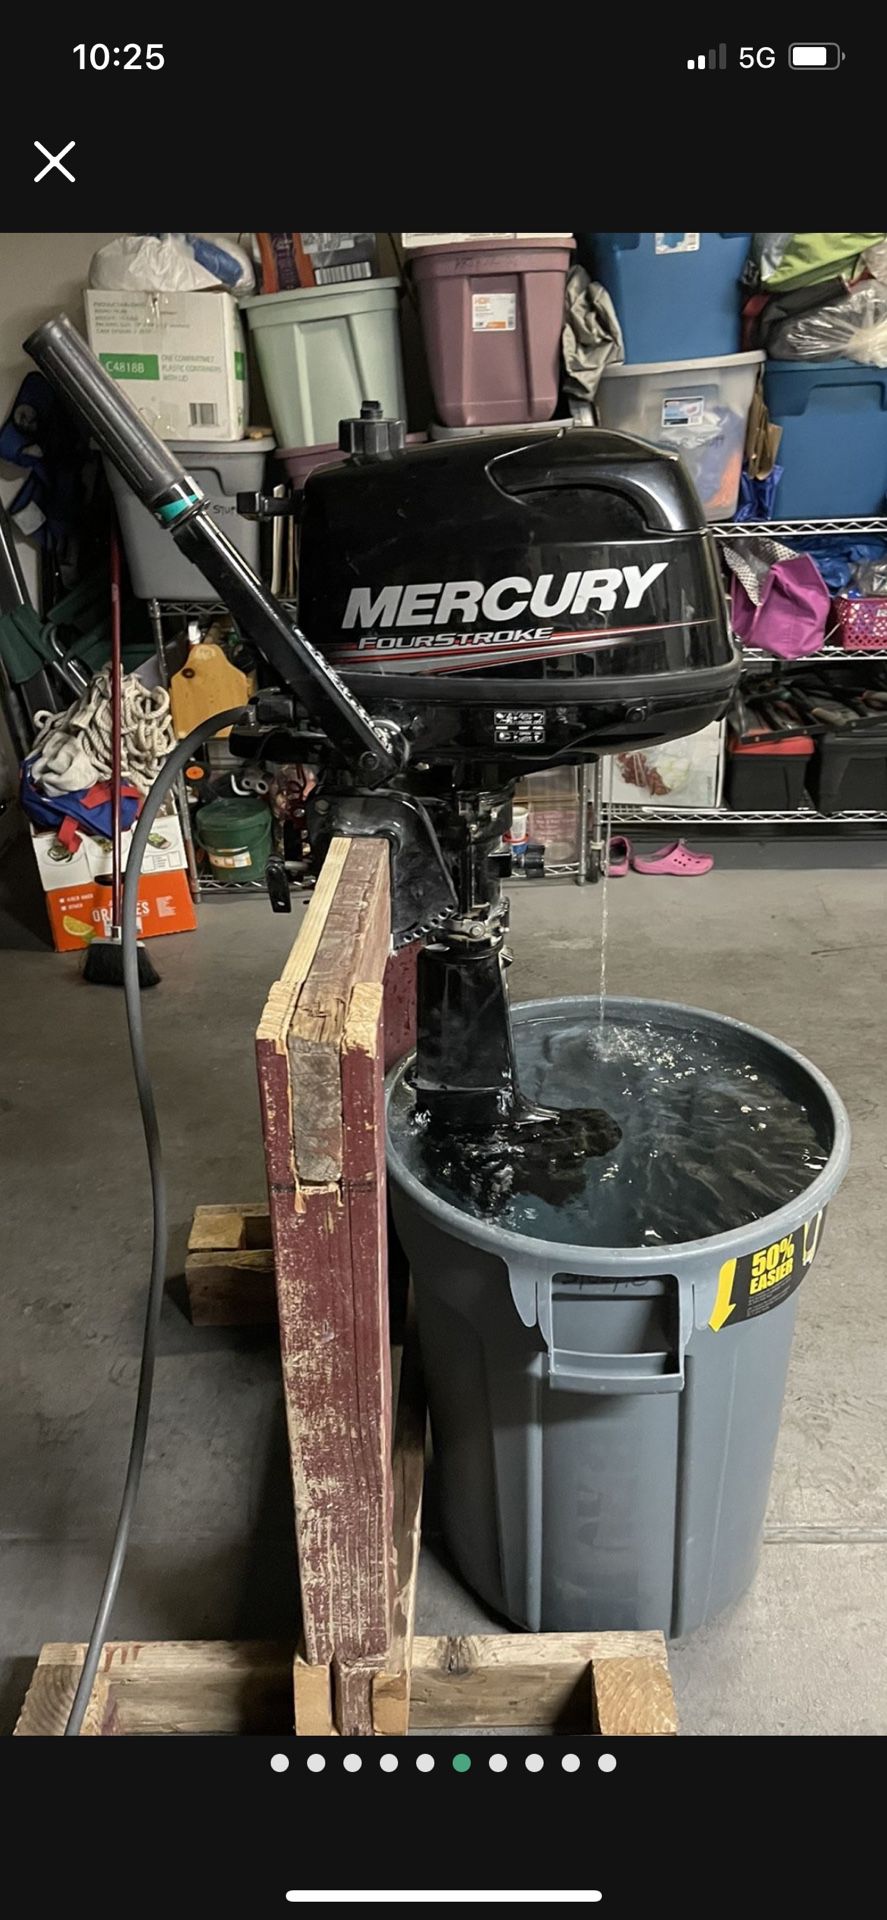 Mercury Outboard Motor 